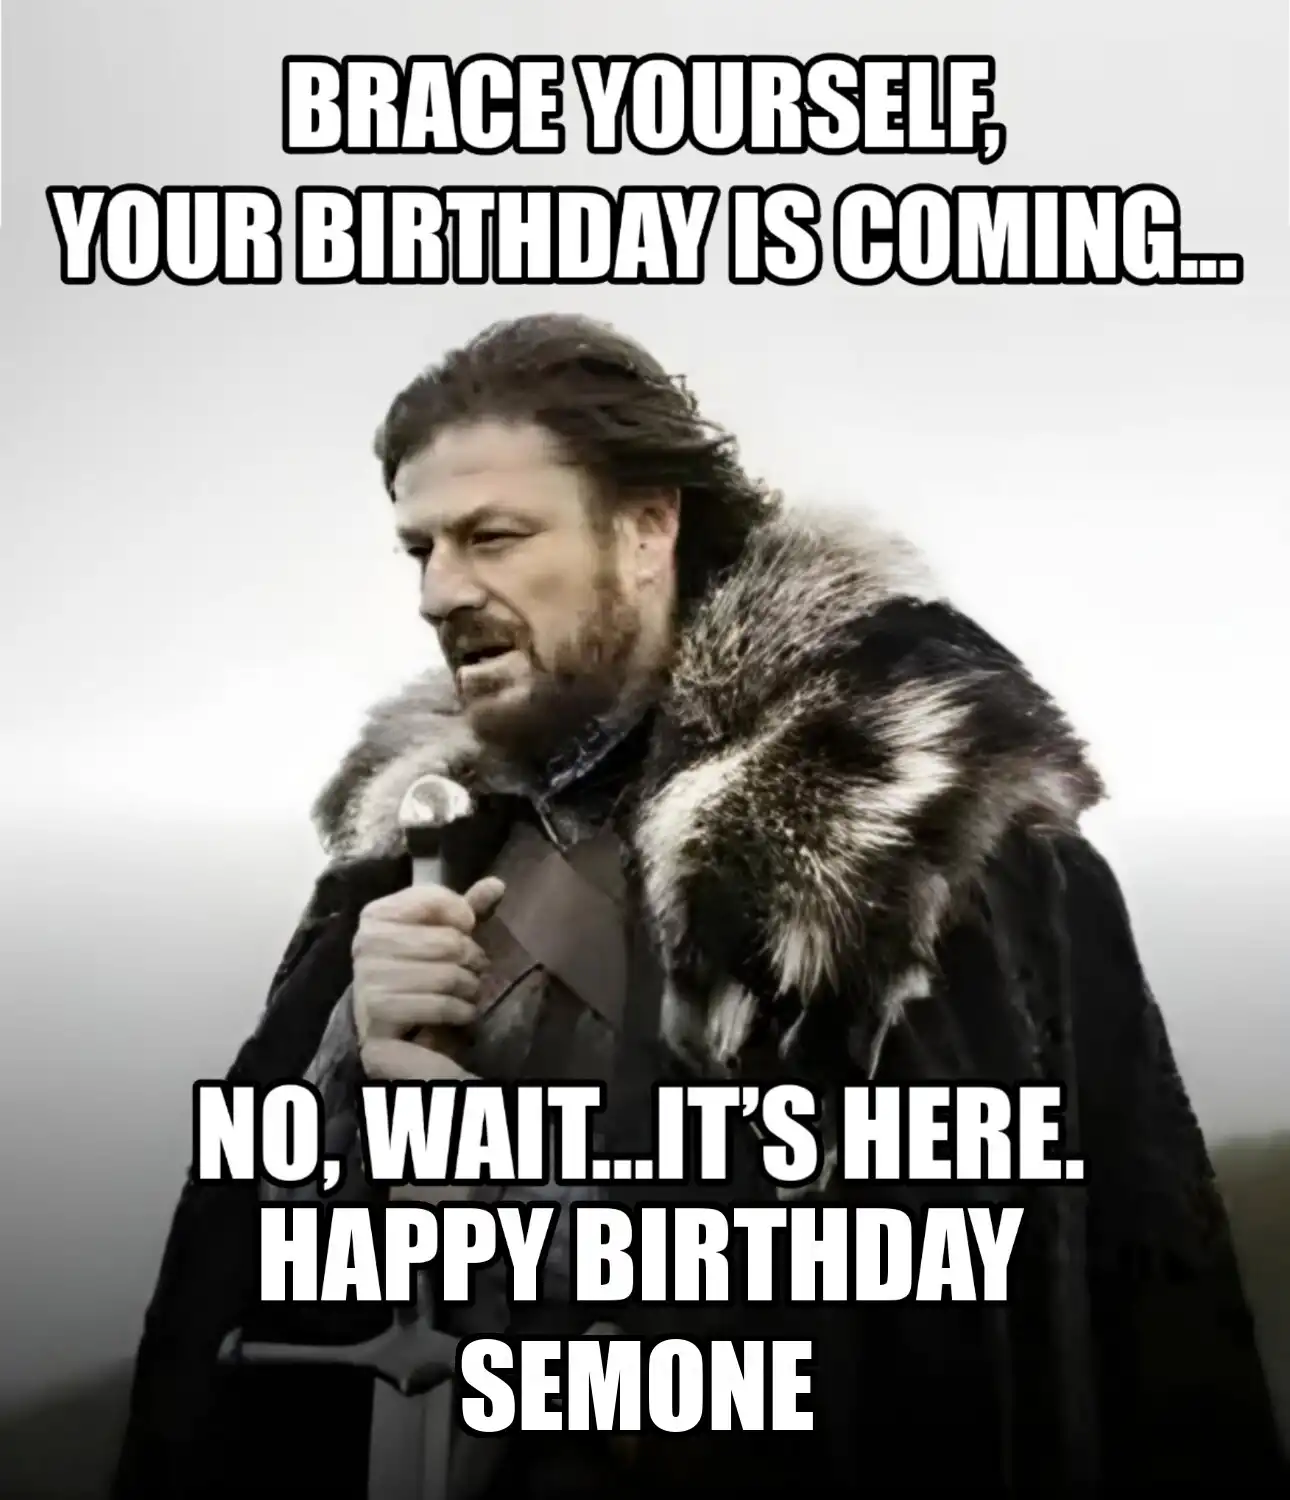 Happy Birthday Semone Brace Yourself Your Birthday Is Coming Meme